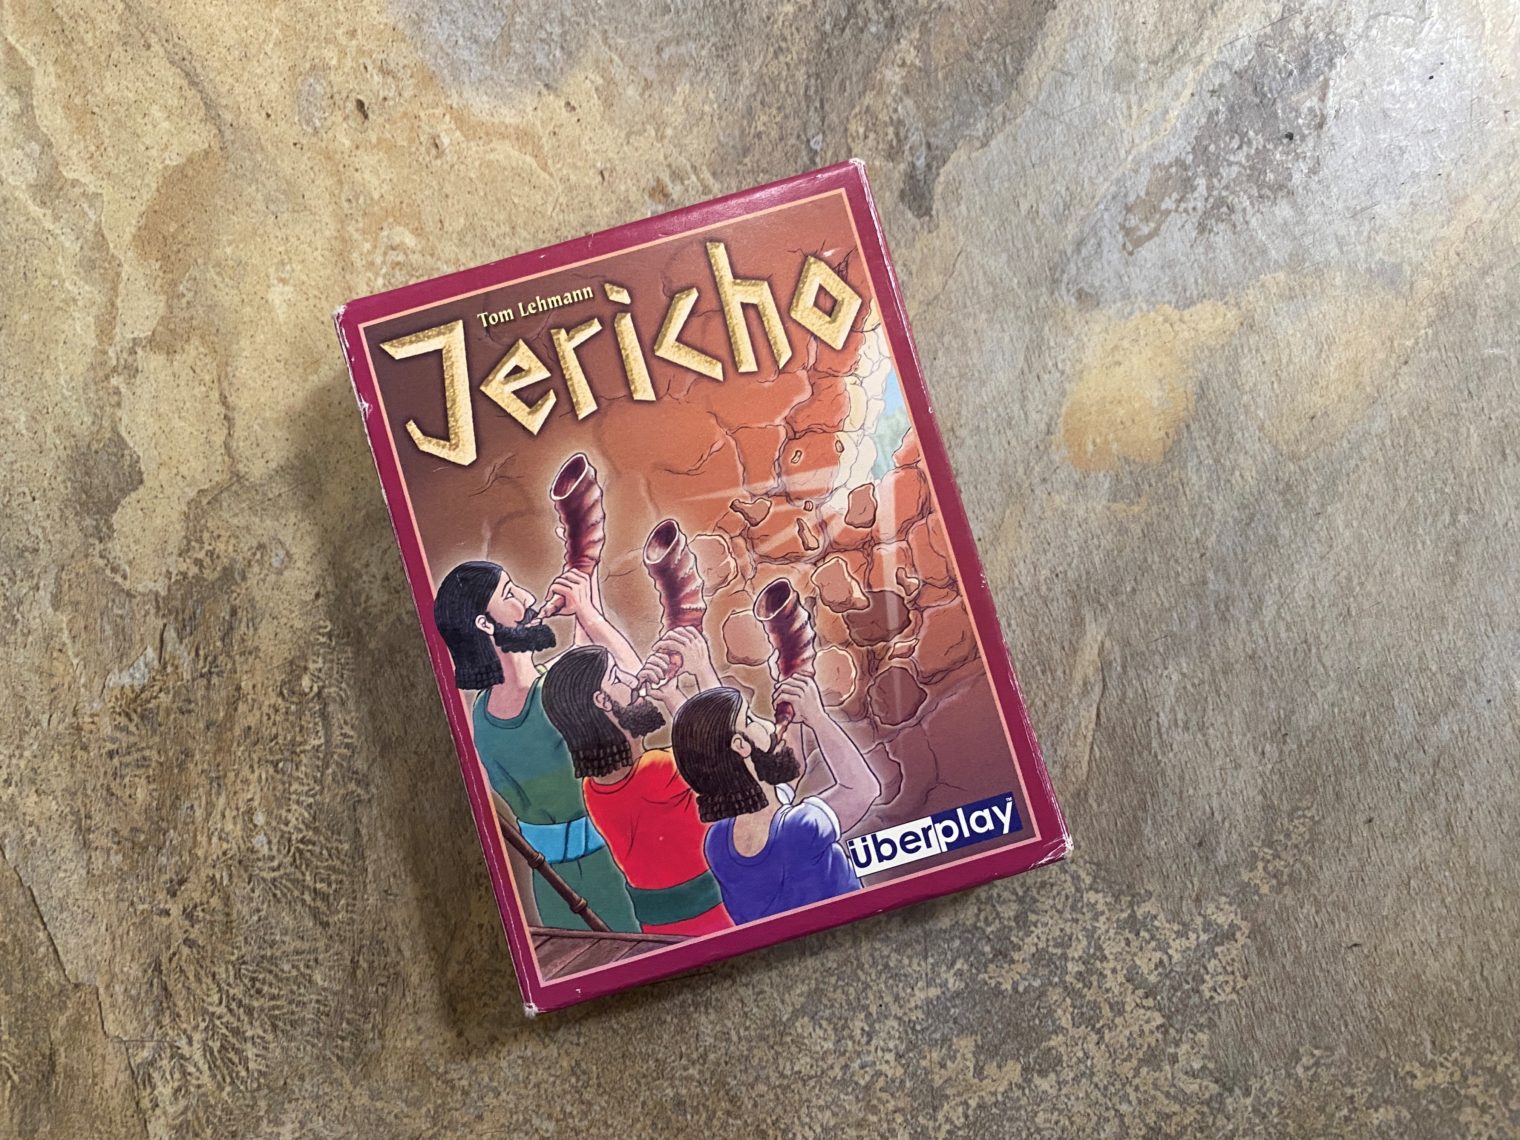 Box art of Jericho card game, Uberplay edition.